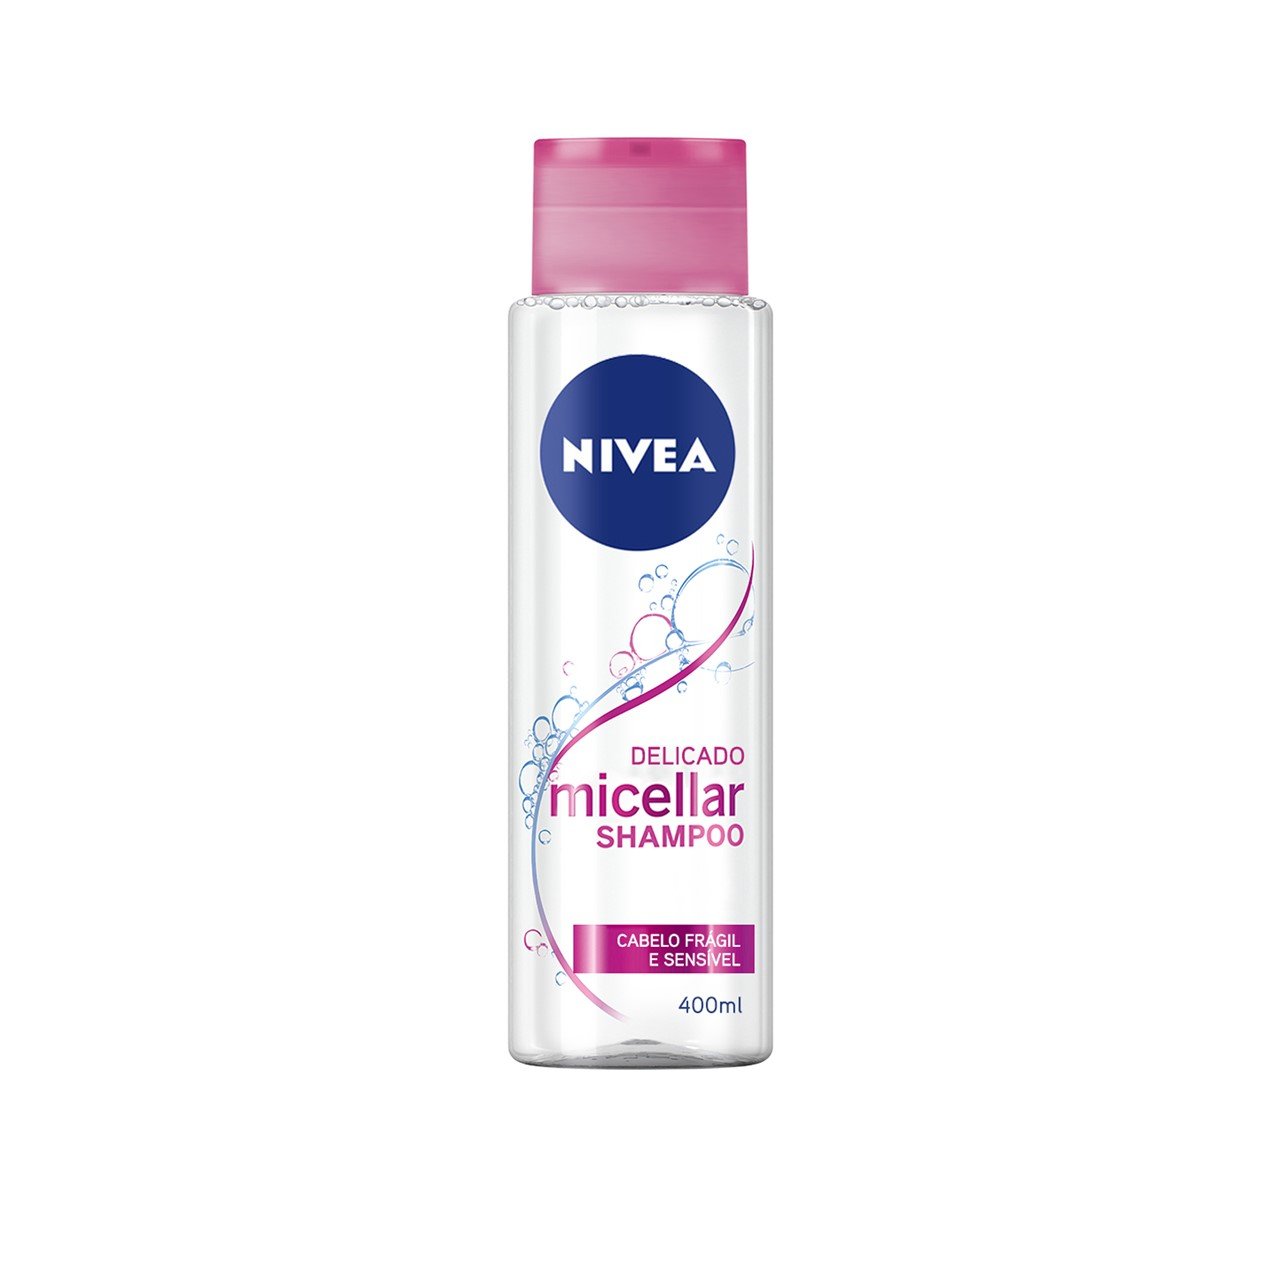 Nivea Comforting Micellar Shampoo 400ml (13.53fl oz) ·